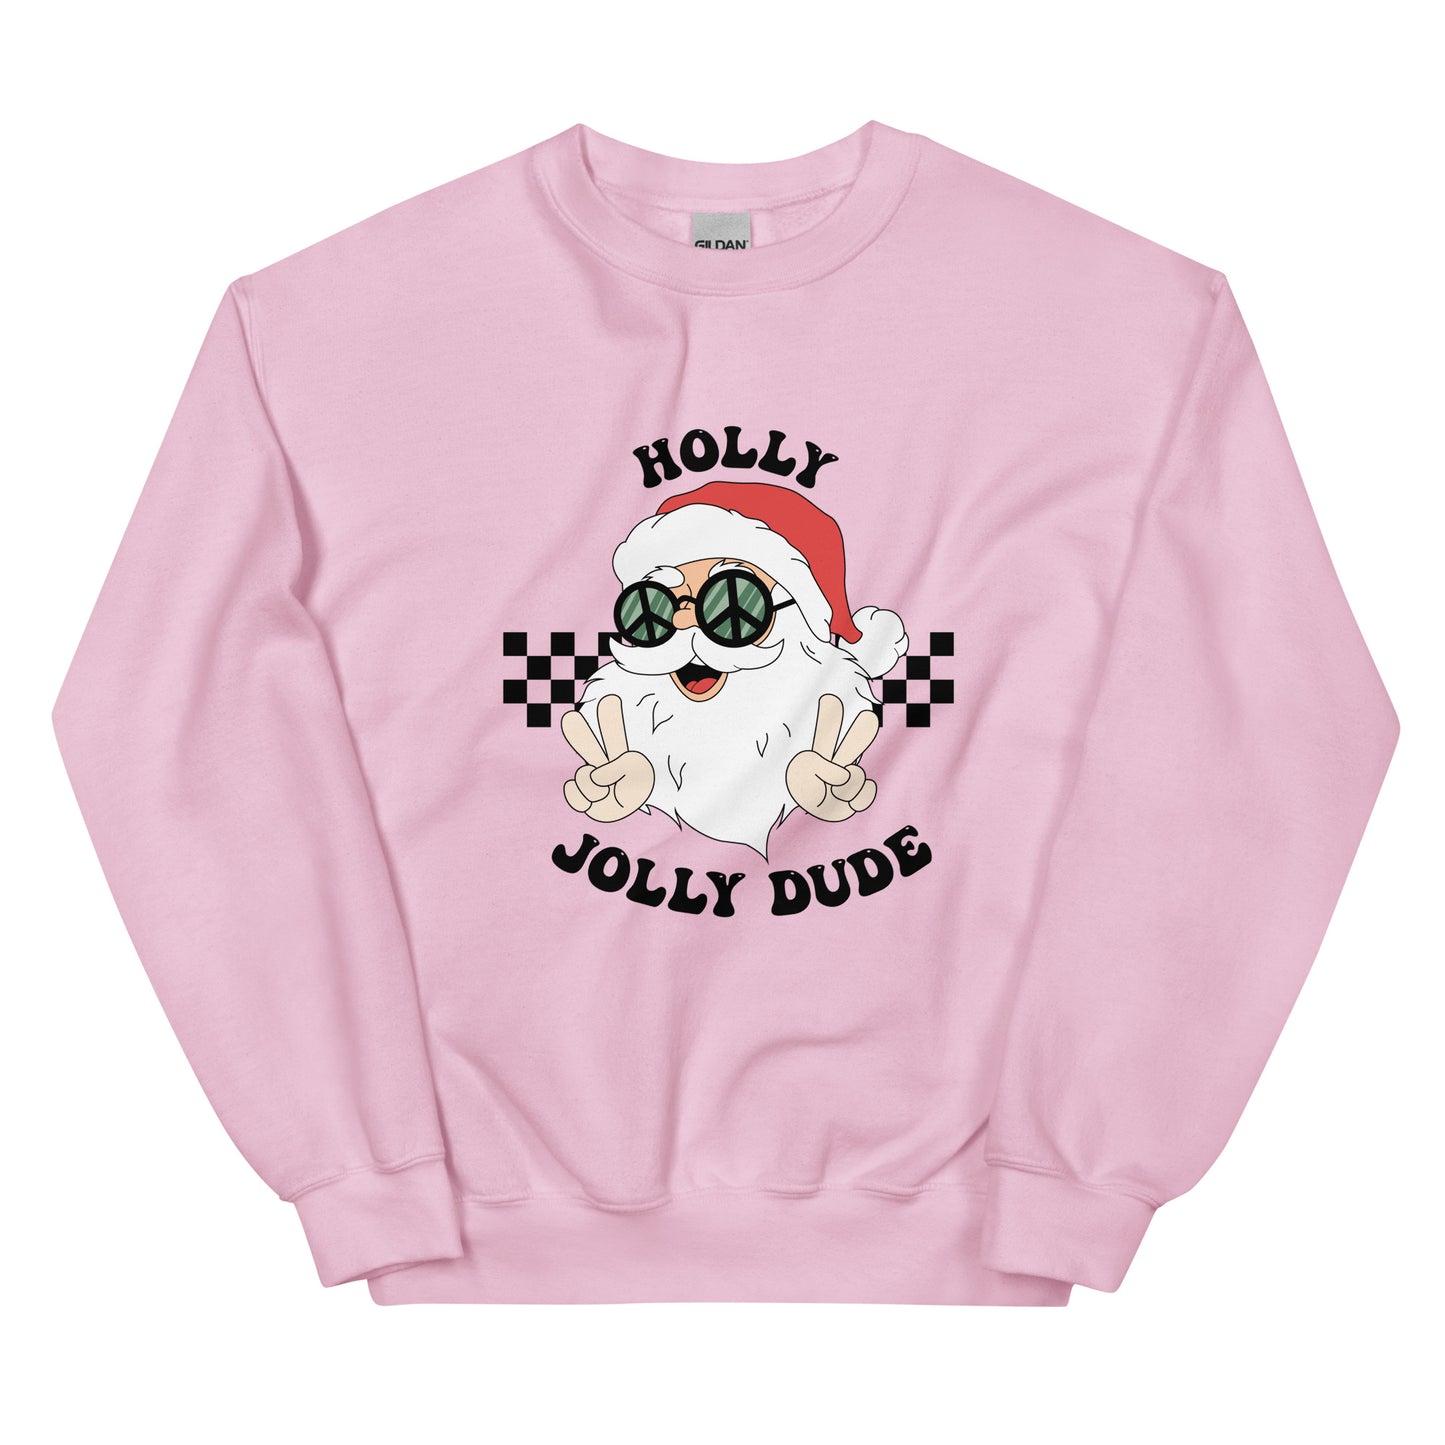 Holly Jolly Dude Unisex Sweatshirt